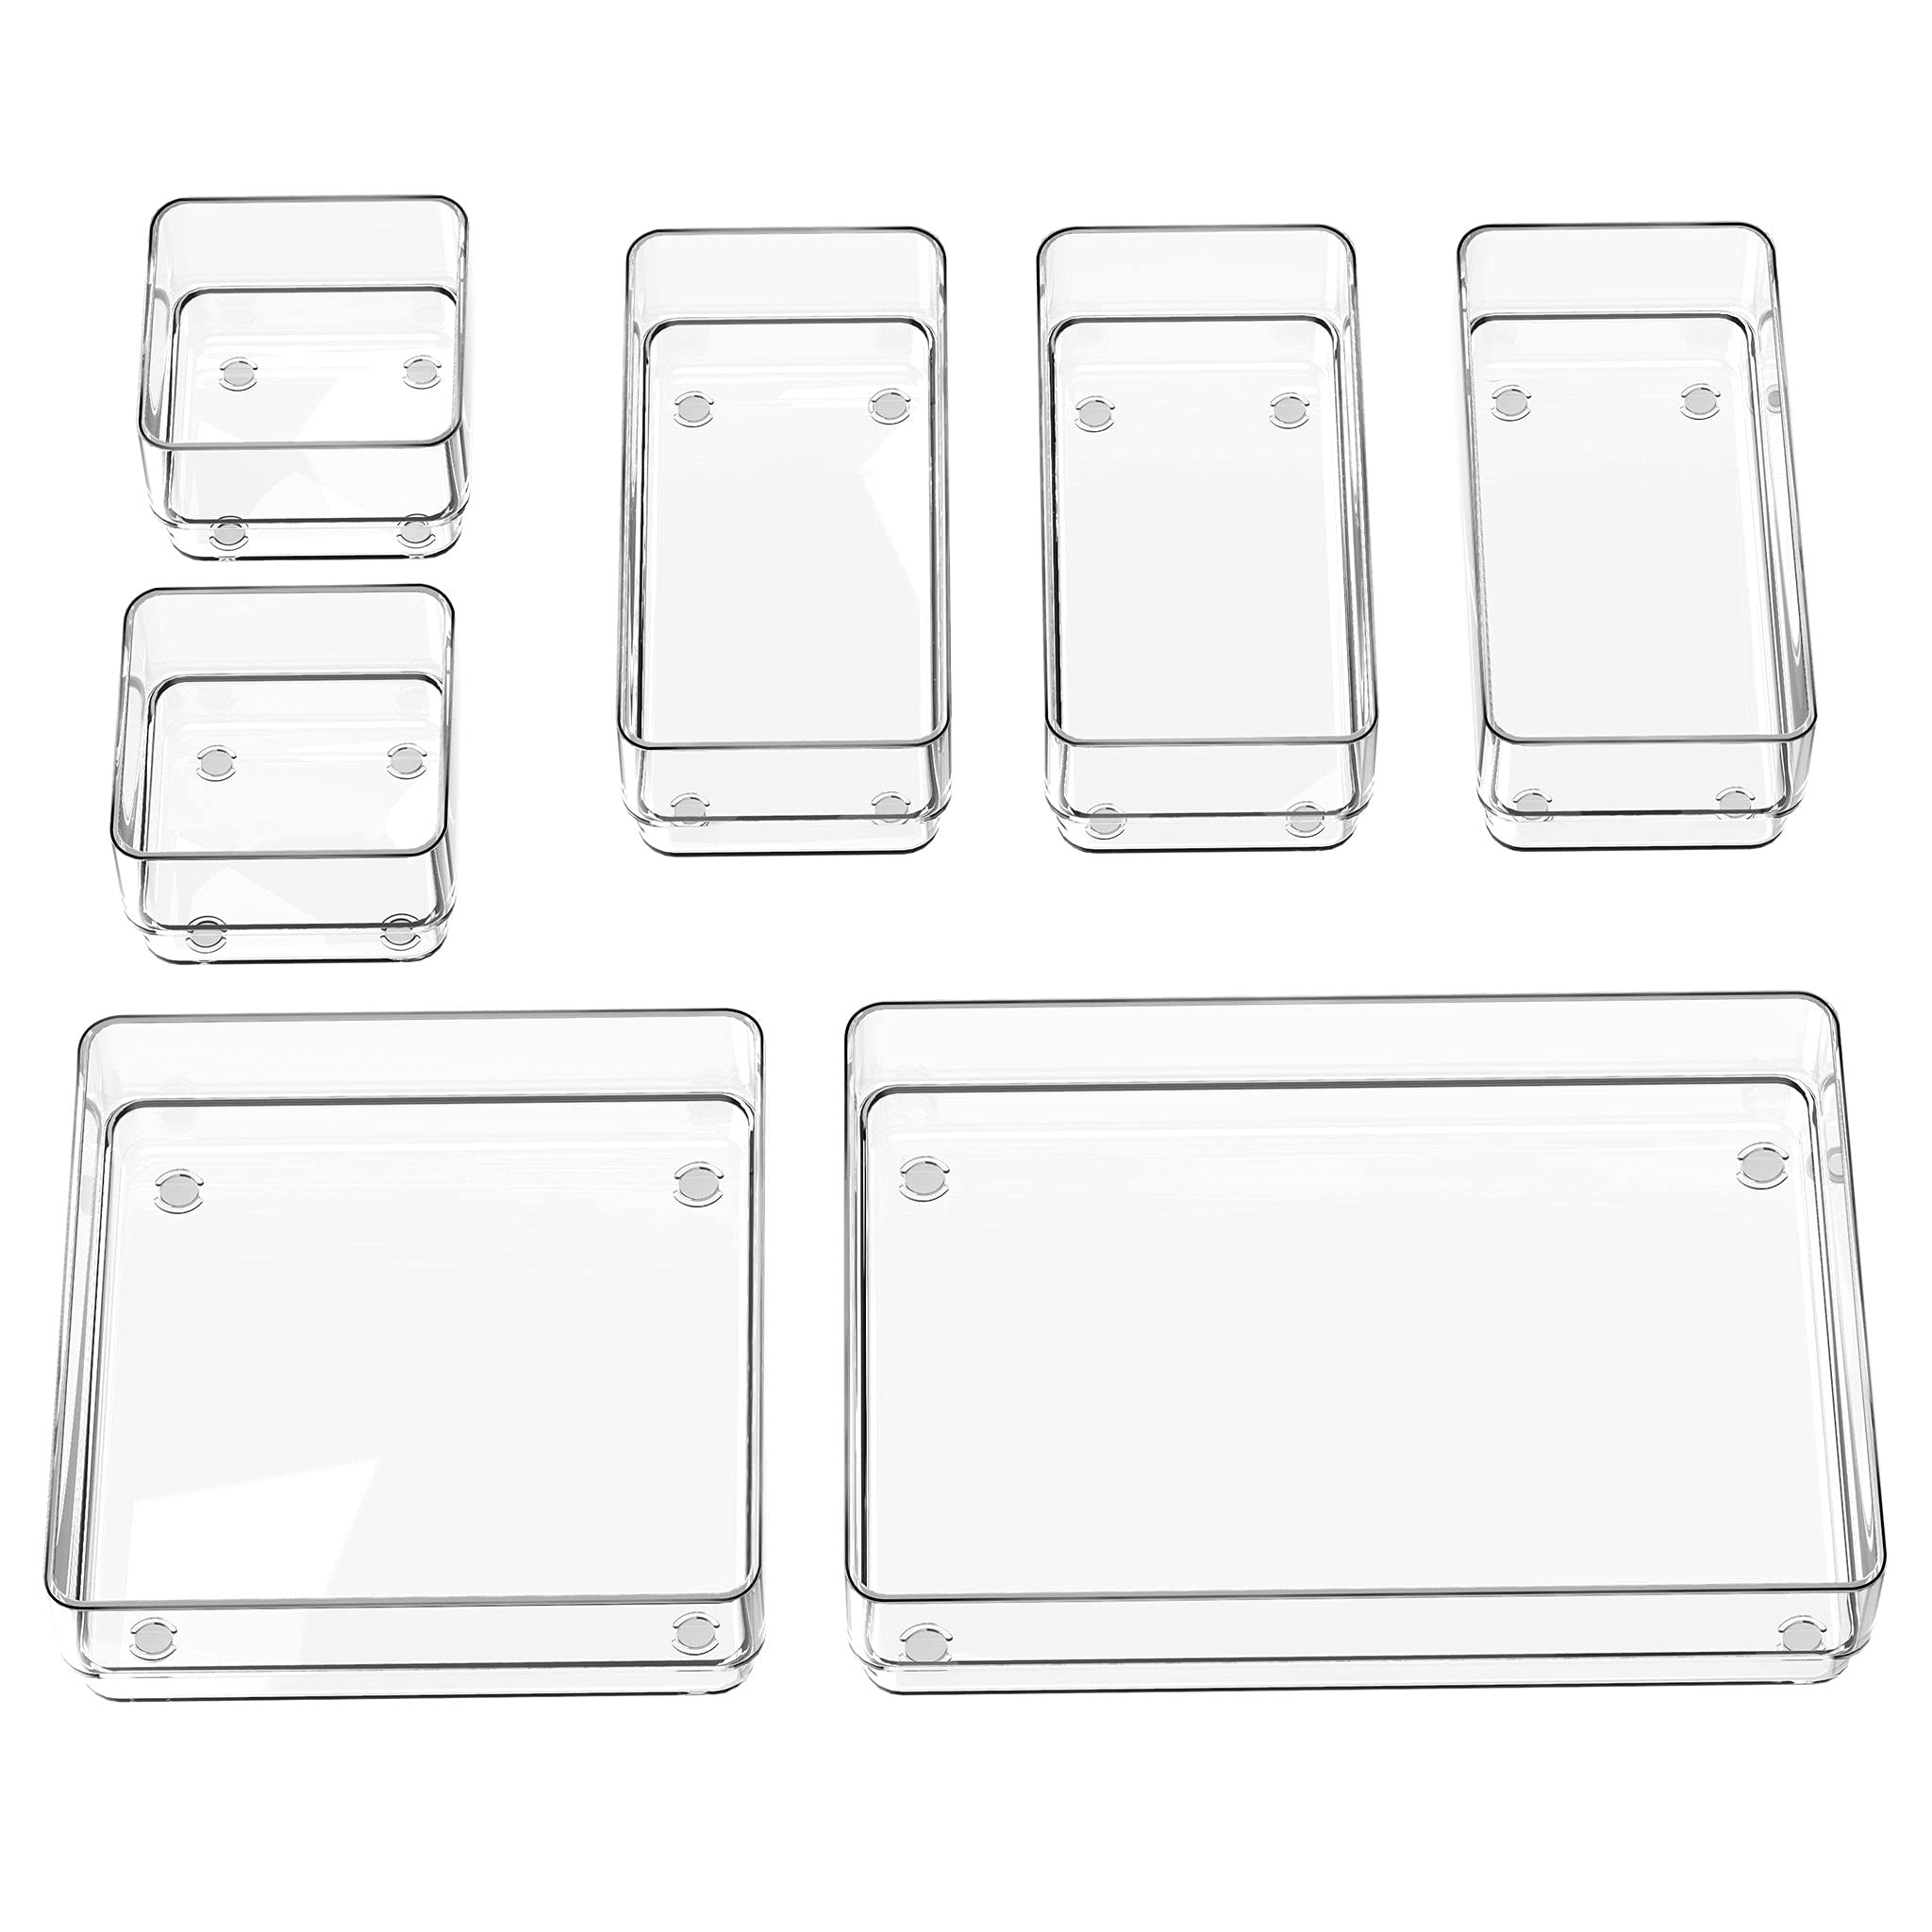 SMARTAKE 7-Piece Drawer Organizer with Non-Slip Silicone Pads, 4